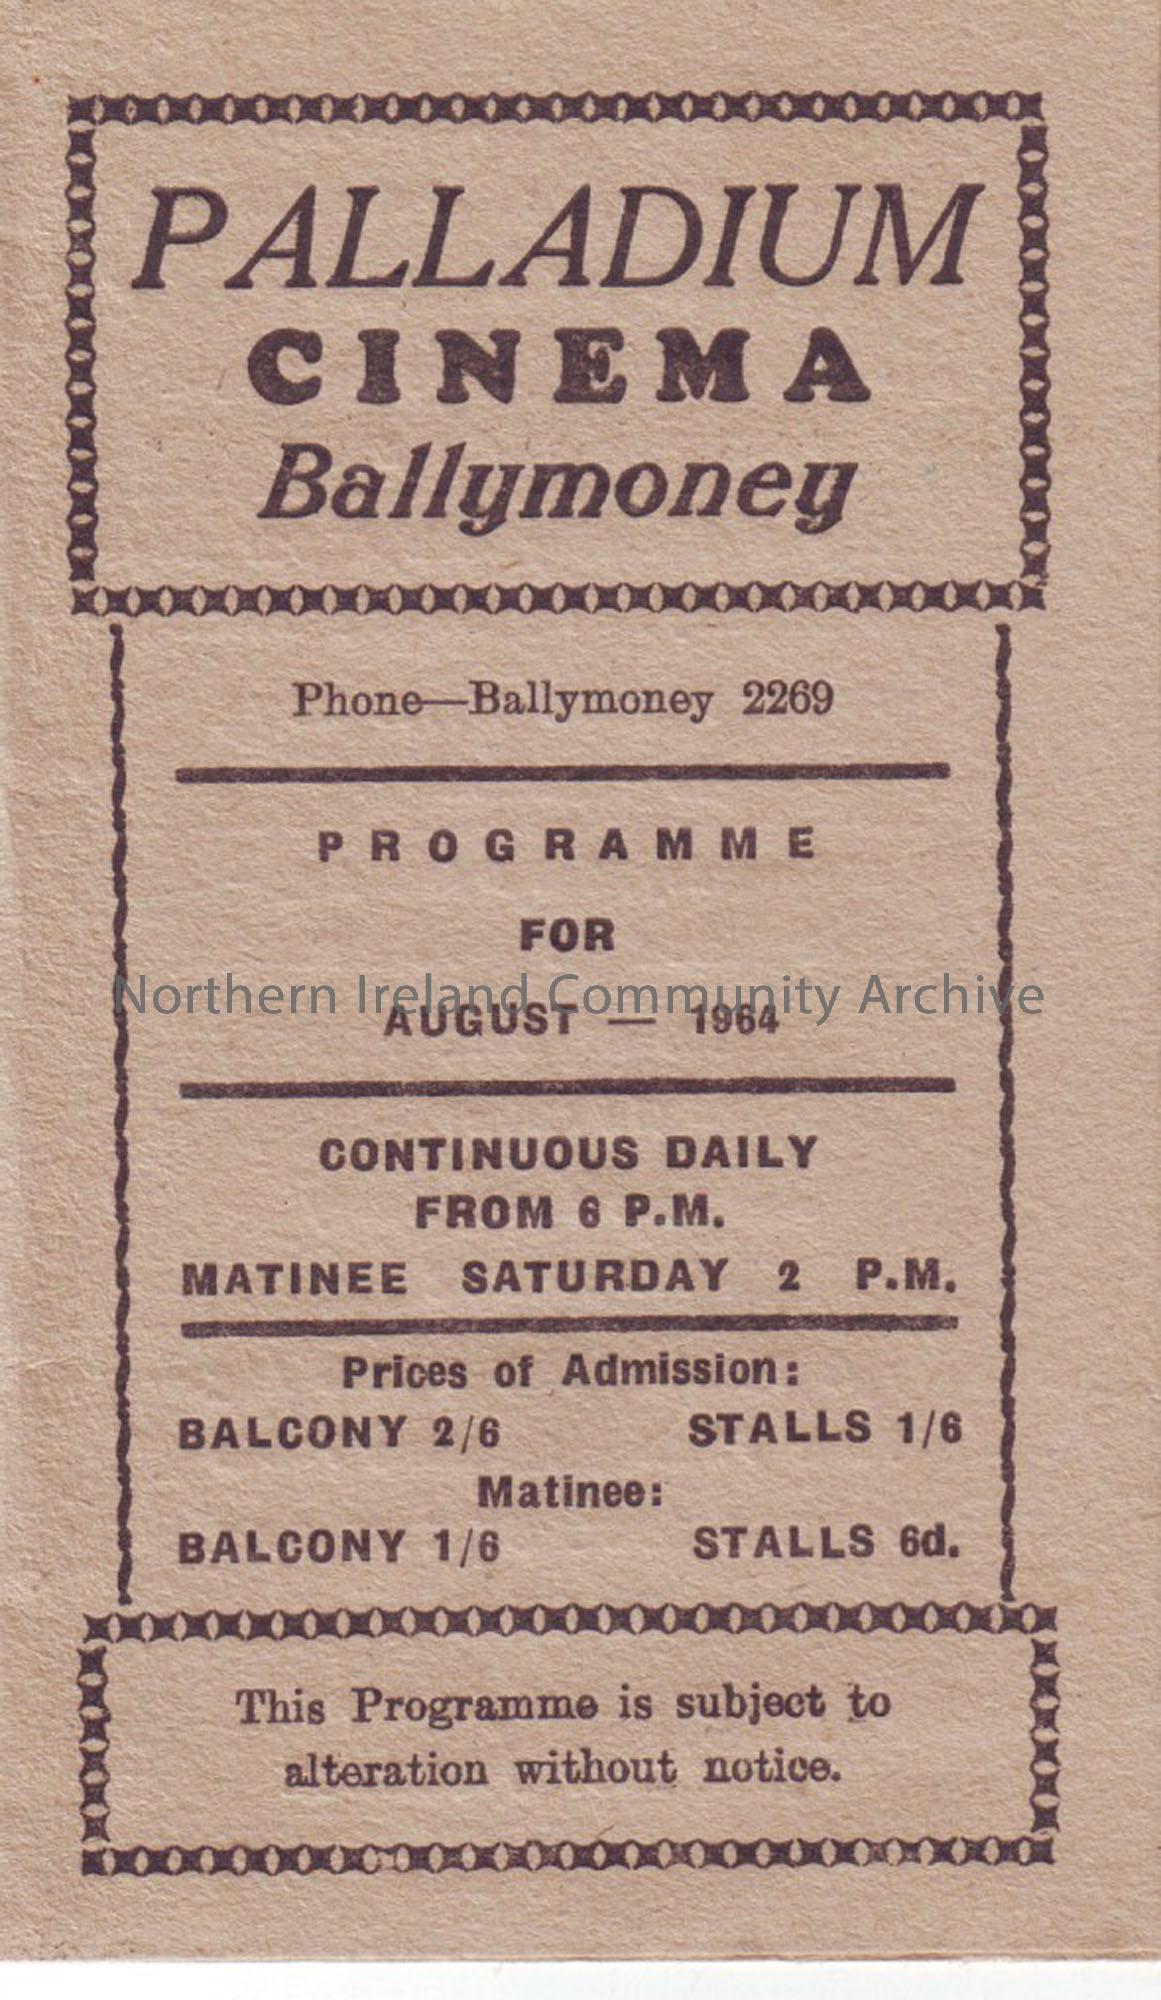 cream monthly programme for Ballymoney Palladium cinema- August 1964